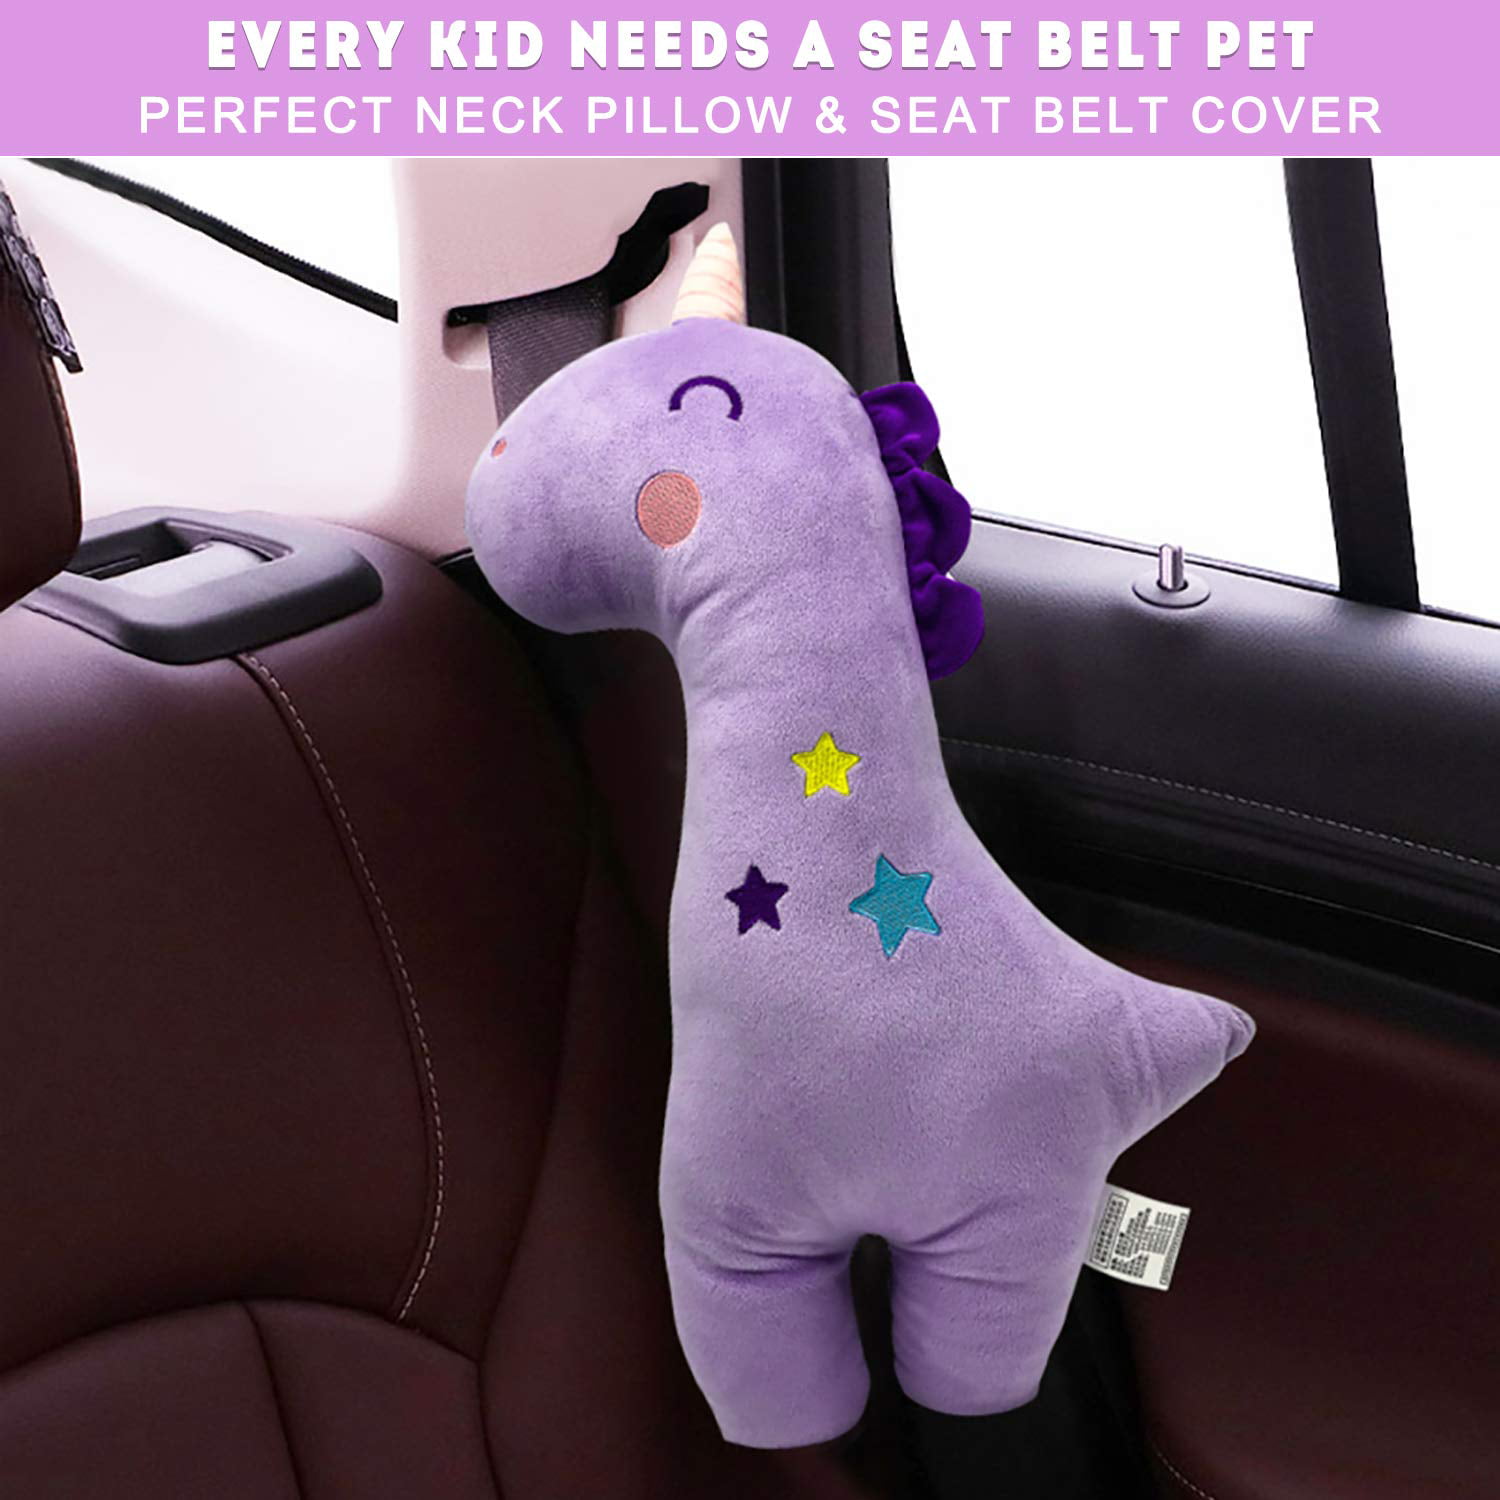 Sevenfly Seat Belt Pillow for Kids,Car Seat Belt Cover,Vehicle Shoulder Pads,Plush Soft Auto Seat Strap Headrest Neck Support Seatbelt Pillow for Children Pink 